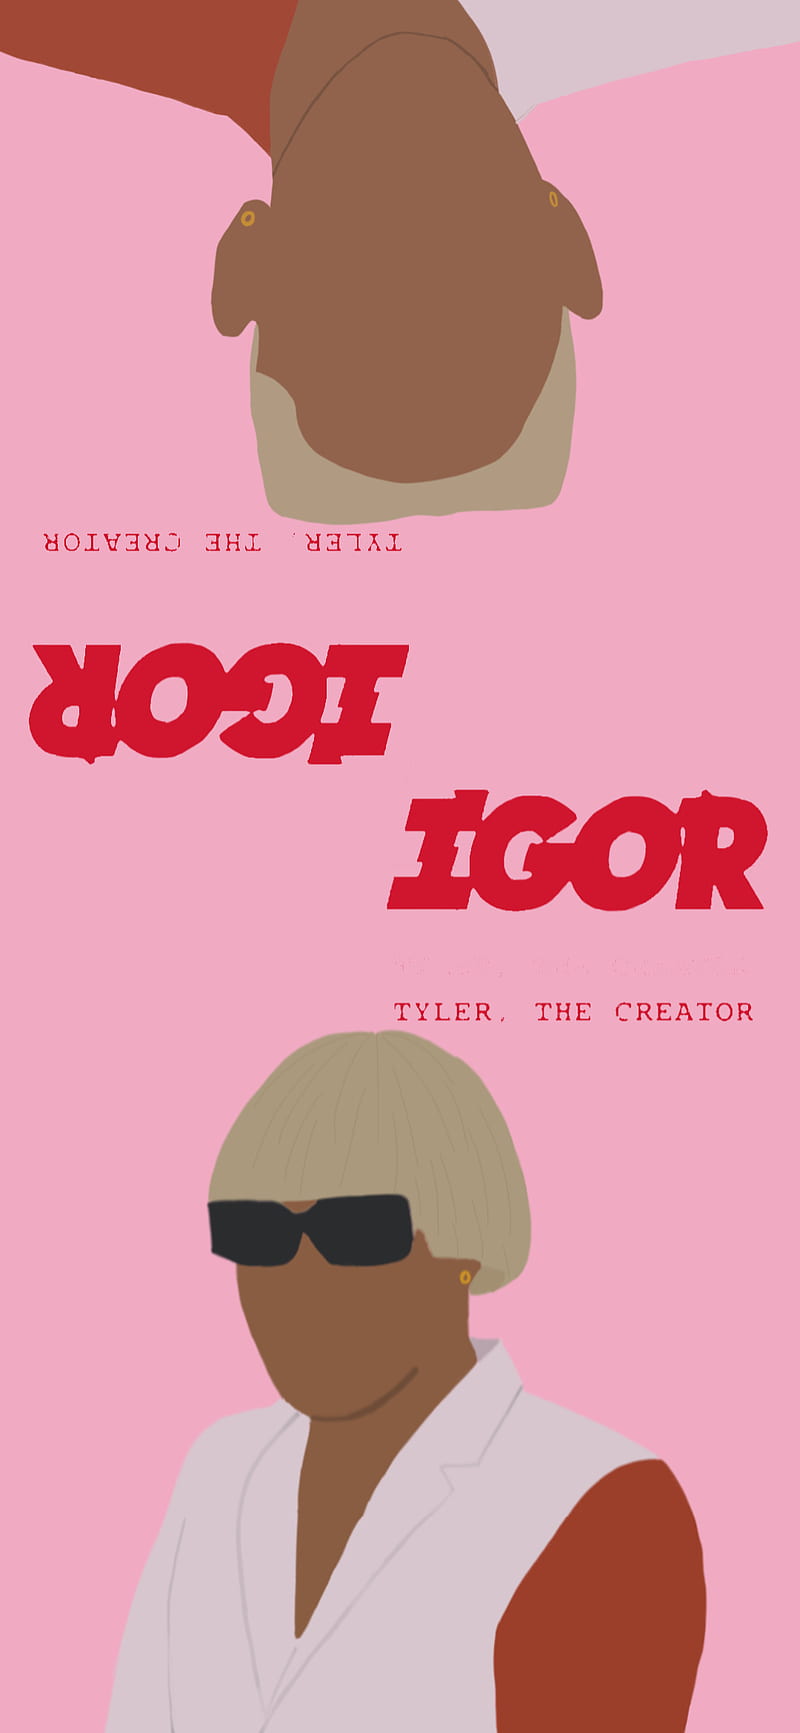 tyler the creator  IGOR  Tyler the creator Tyler the creator wallpaper  Music poster design